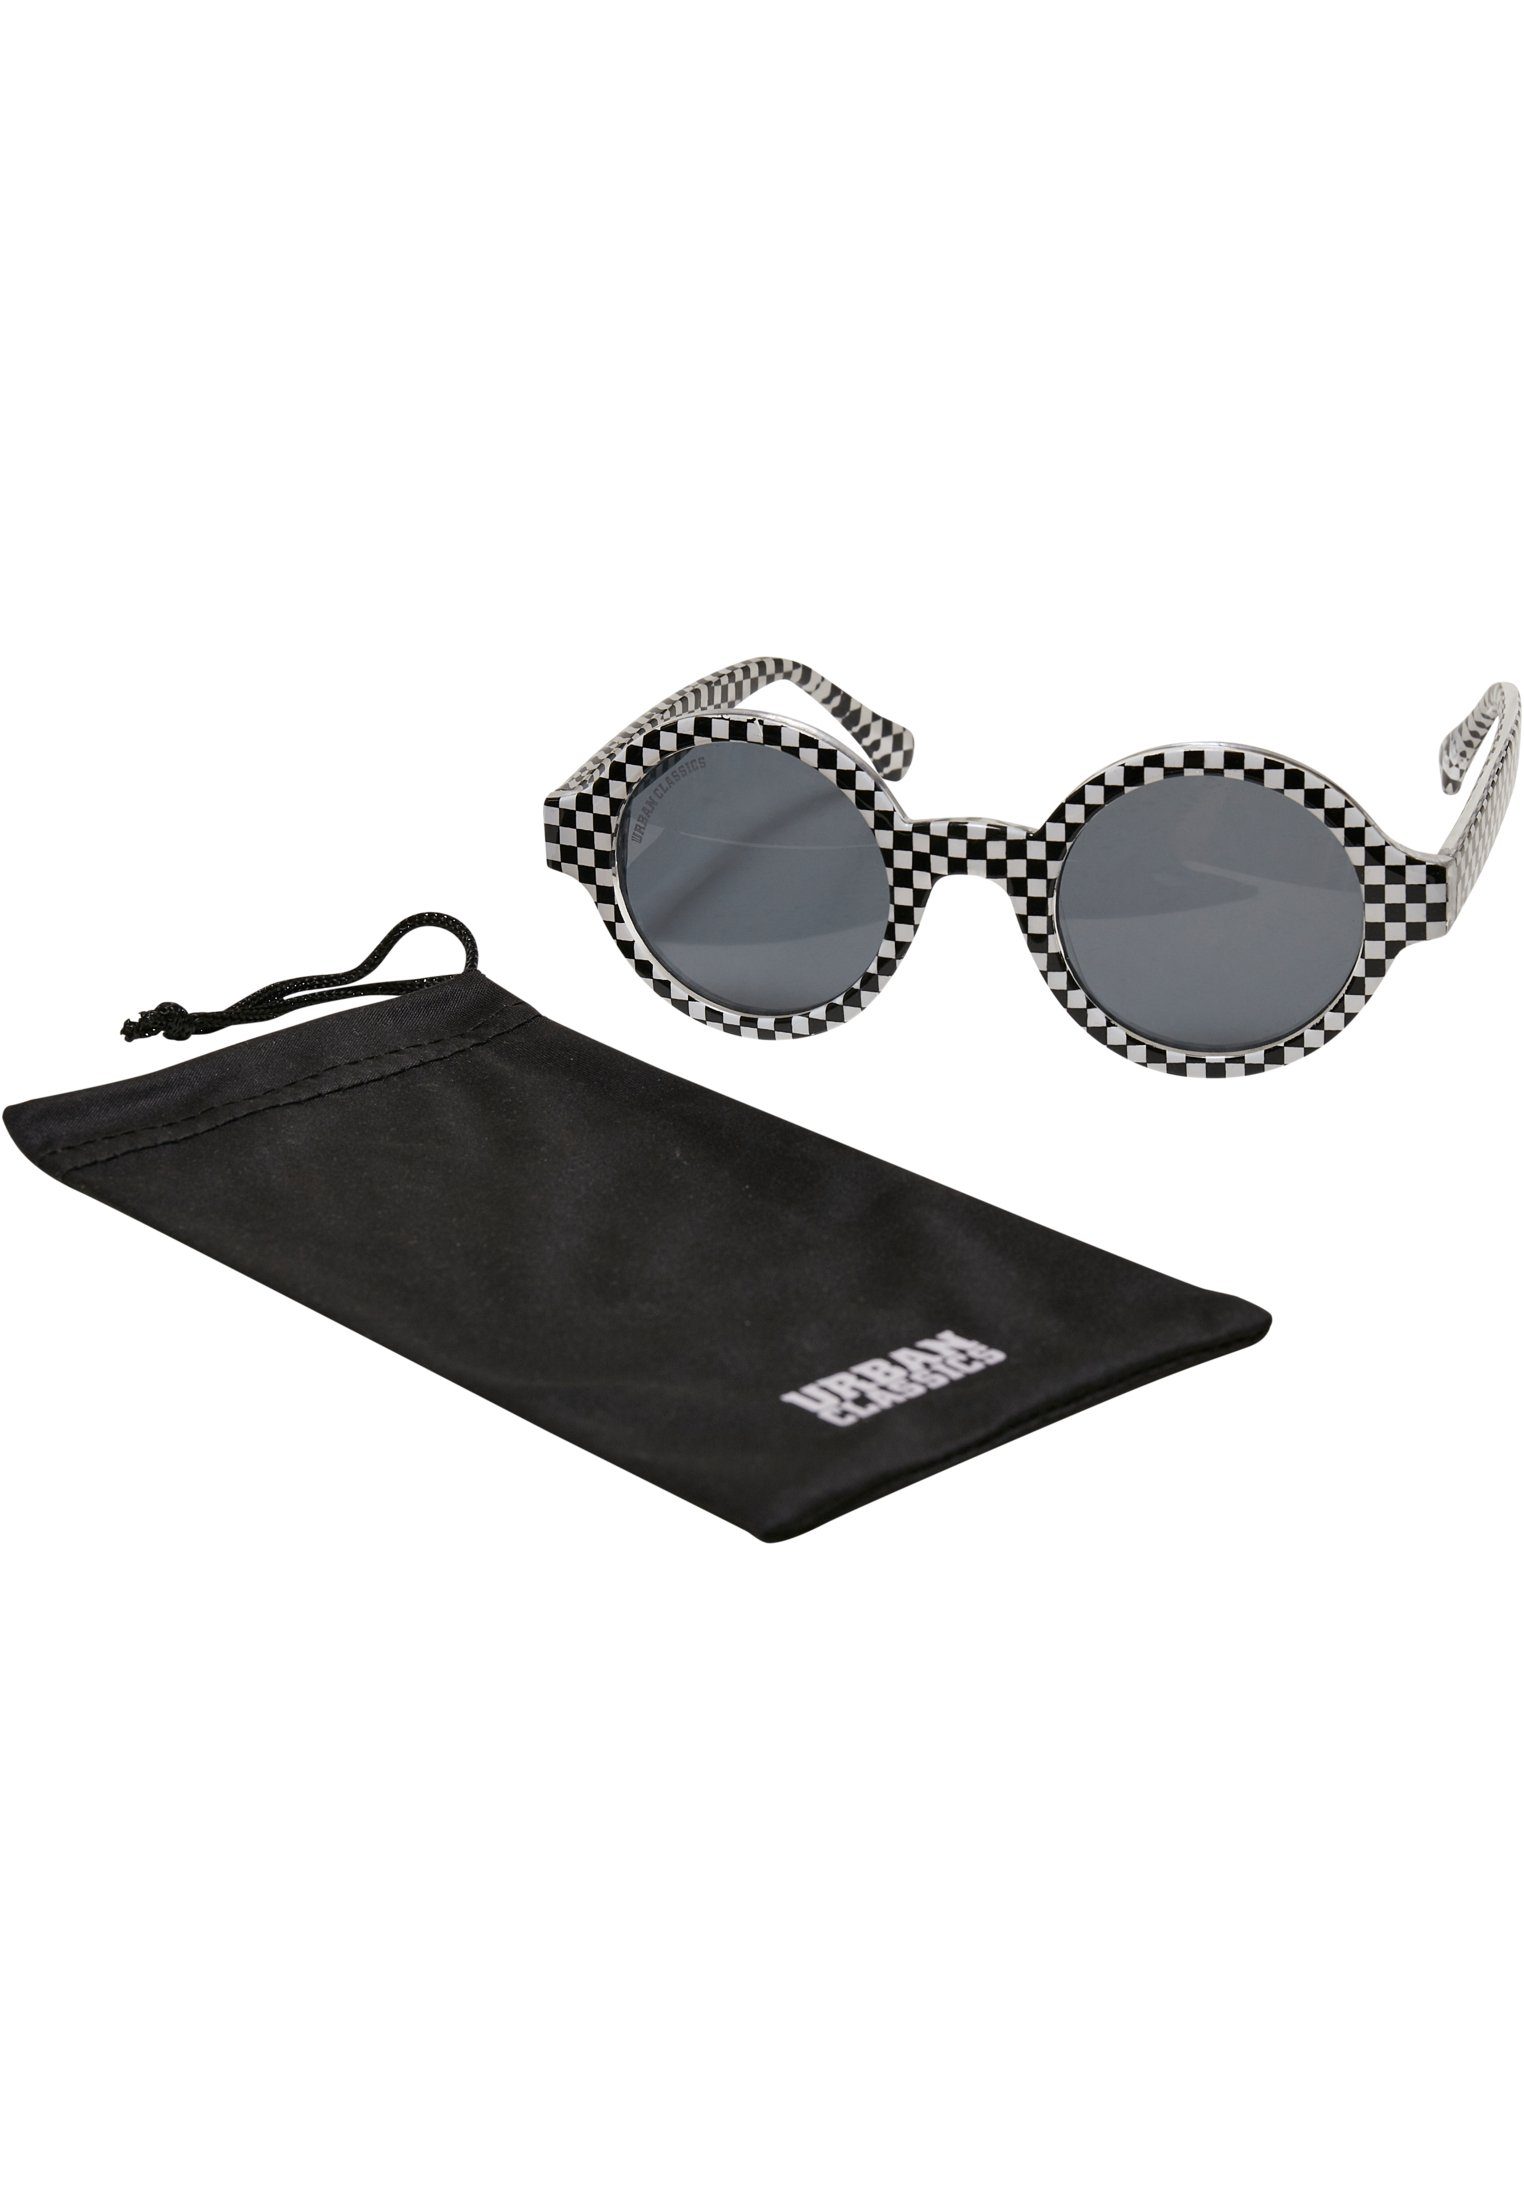 URBAN CLASSICS Sunglasses black/white Sonnenbrille UC Funk Accessoires Retro